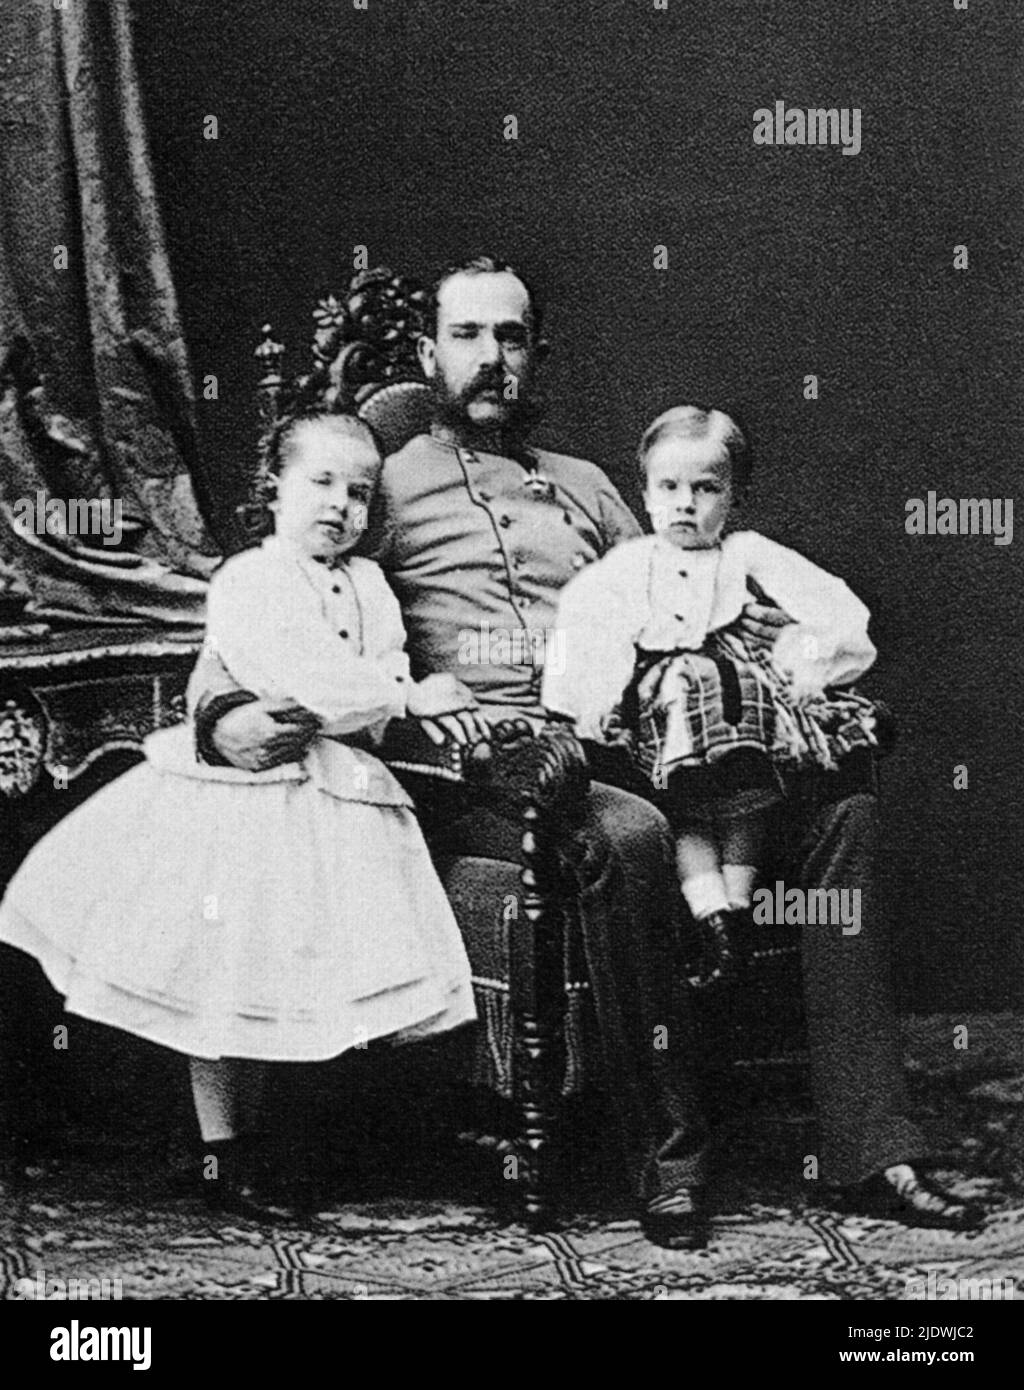 1904 , Wien , Austria   : The austrian Kaiser FRANZ JOSEF ( Schonbrunn 1830 - 1916 ) , Emperor of Austria , King of Hungary and Bohemia , husbant of Empress Elisabeth SISSI of Bayern  . In this photo with the 2 sons : GISELA ( 1856 - 1932 ) and RUDOLF ( 1858 - suicide at Mayerling 1889 )    - FRANCESCO GIUSEPPE - JOSEPH - ABSBURG - ASBURG - ASBURGO - NOBILITY - NOBILI - NOBILTA' - REALI - HABSBURG - HASBURG - ROYALTY - divisa militare - military uniform - figli - bambini - child - childrens   ----  Archivio GBB Stock Photo